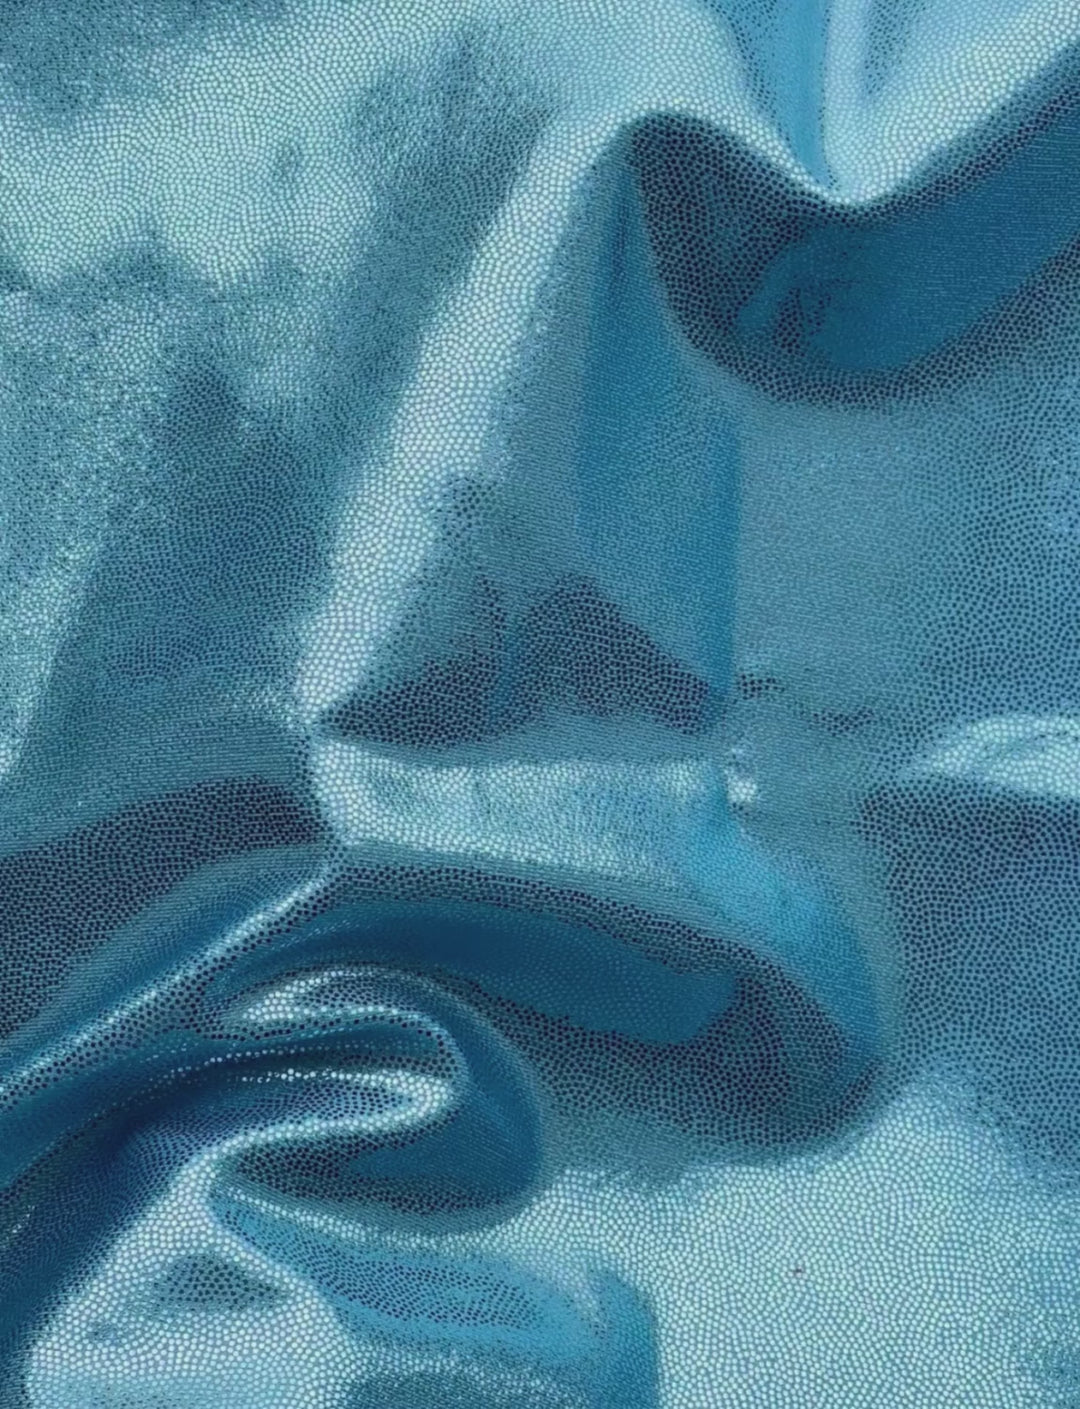 Feuille bleu poudre (3)